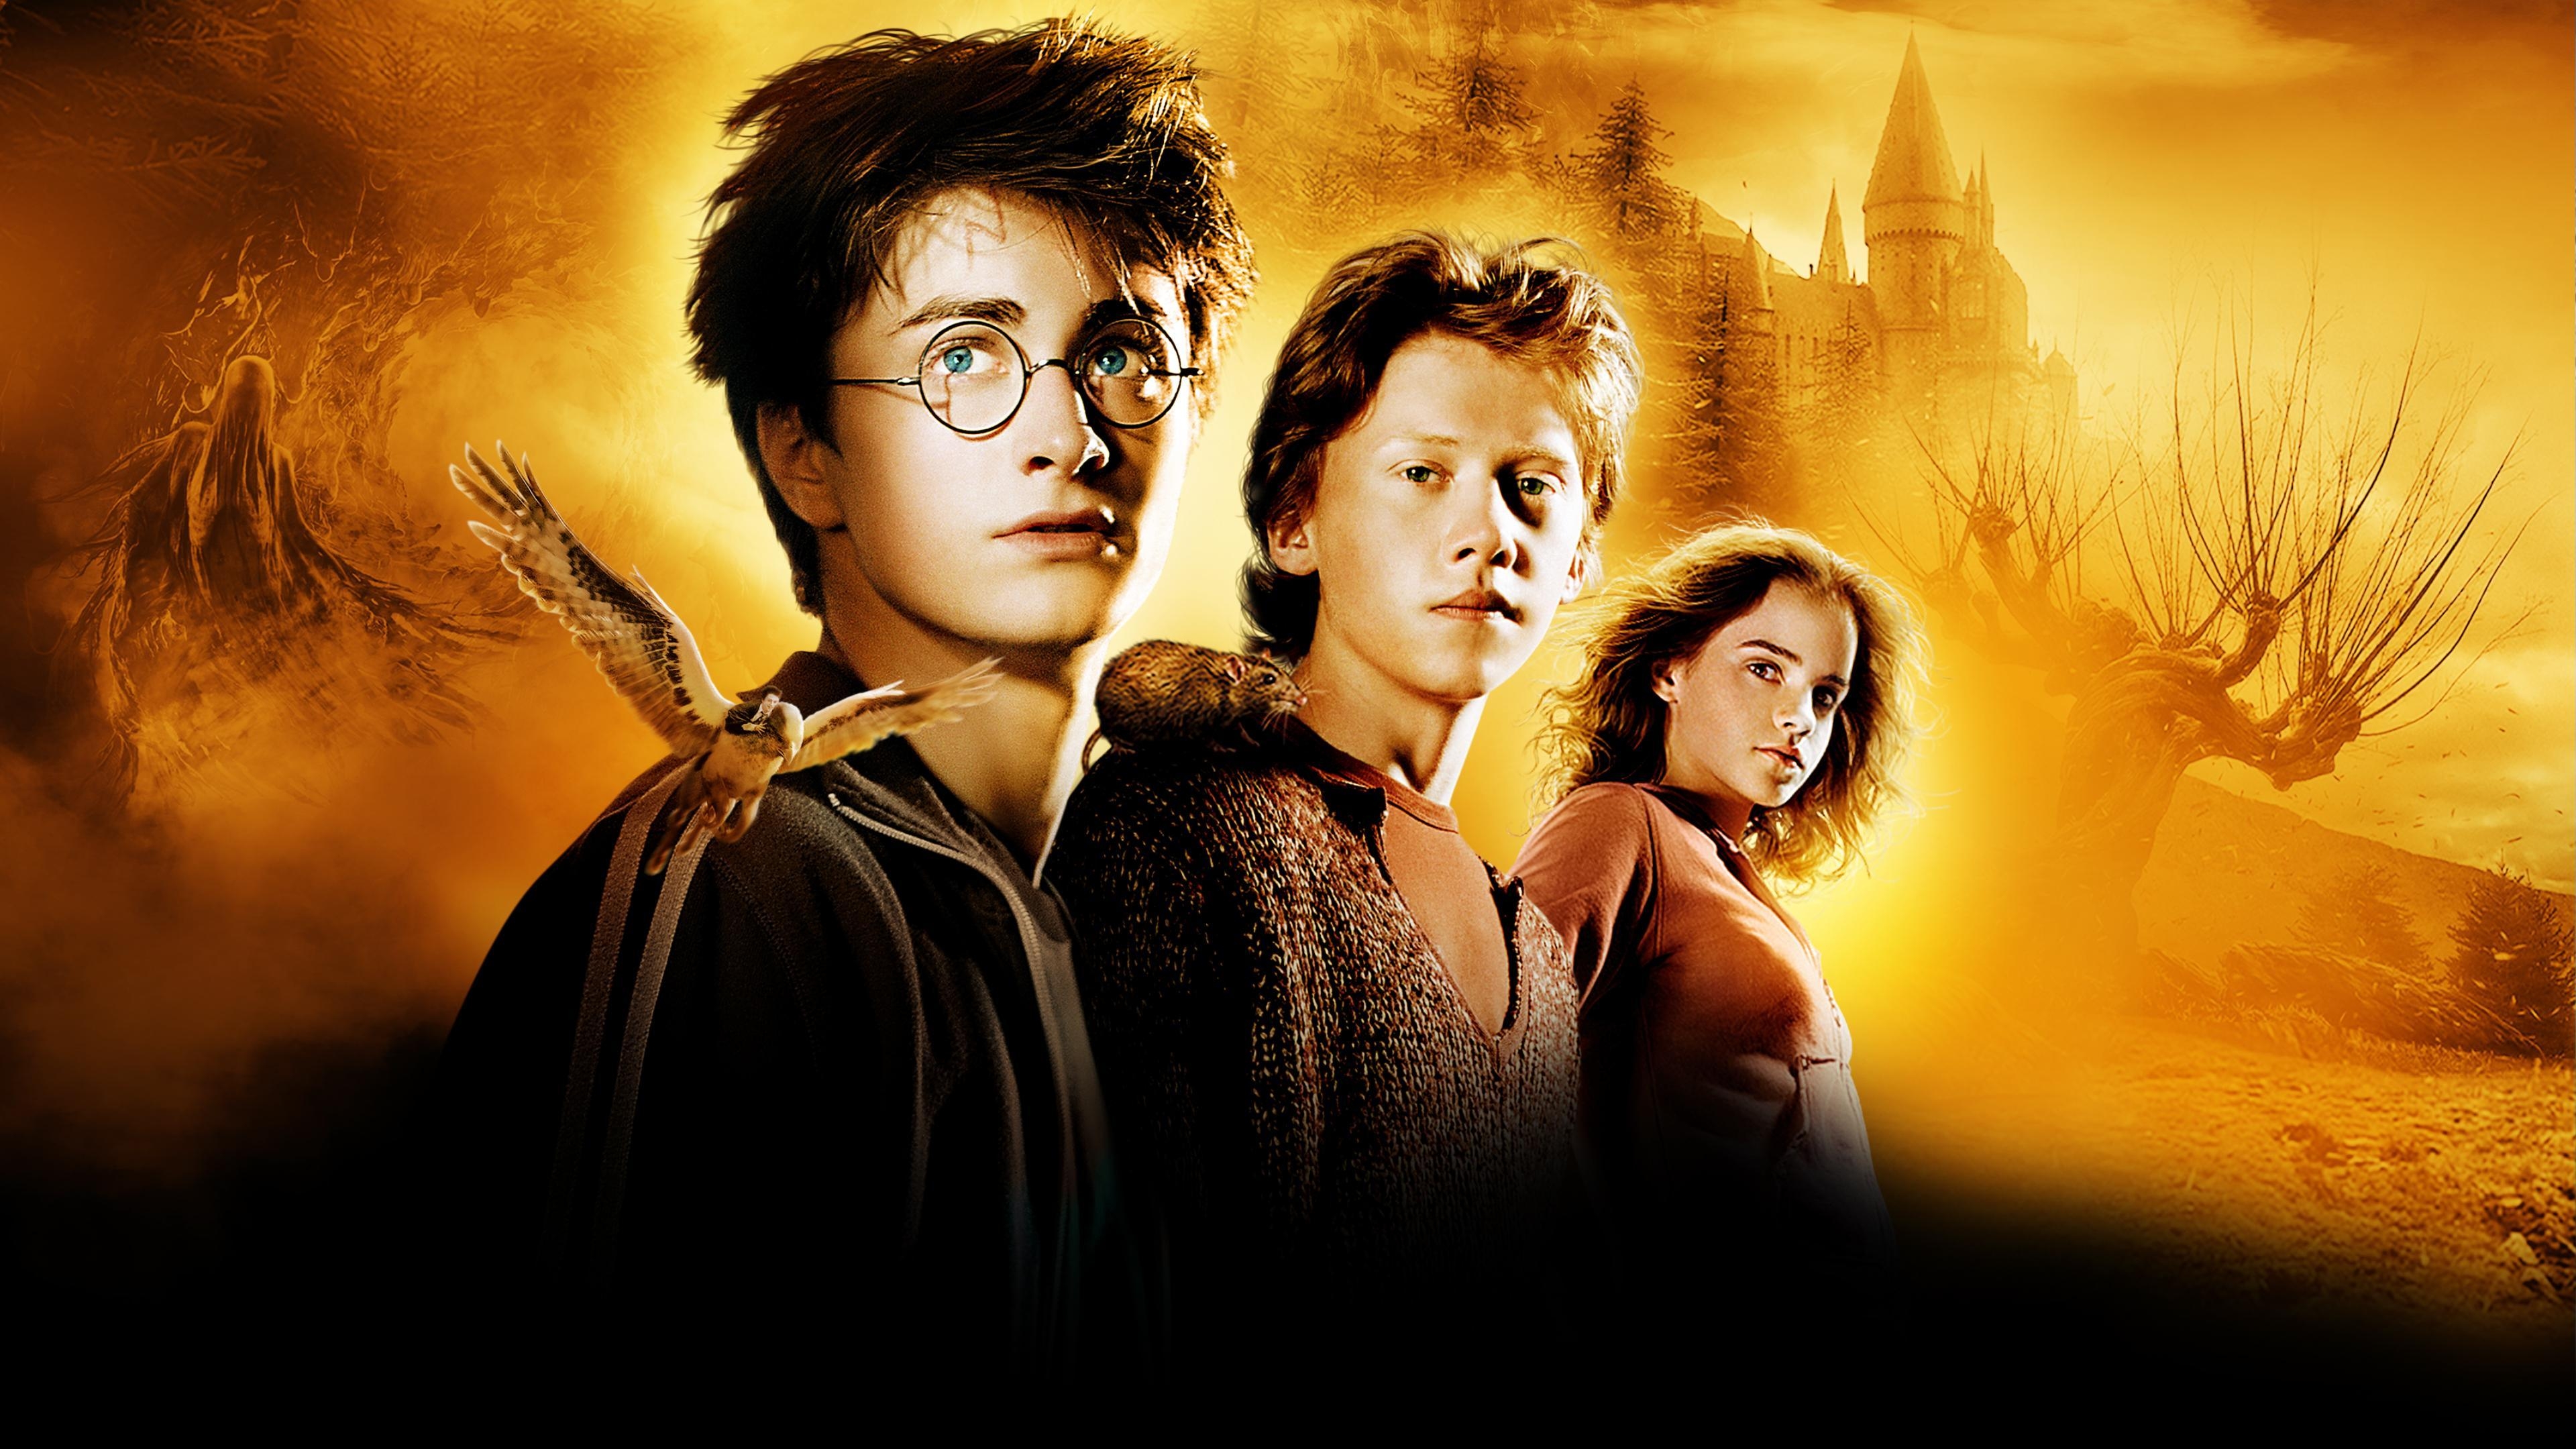 HD wallpaper, Harry Potter, Ron Weasley, Harry Potter And The Prisoner Of Azkaban, Daniel Radcliffe As Harry Potter, Emma Watson As Hermione Granger